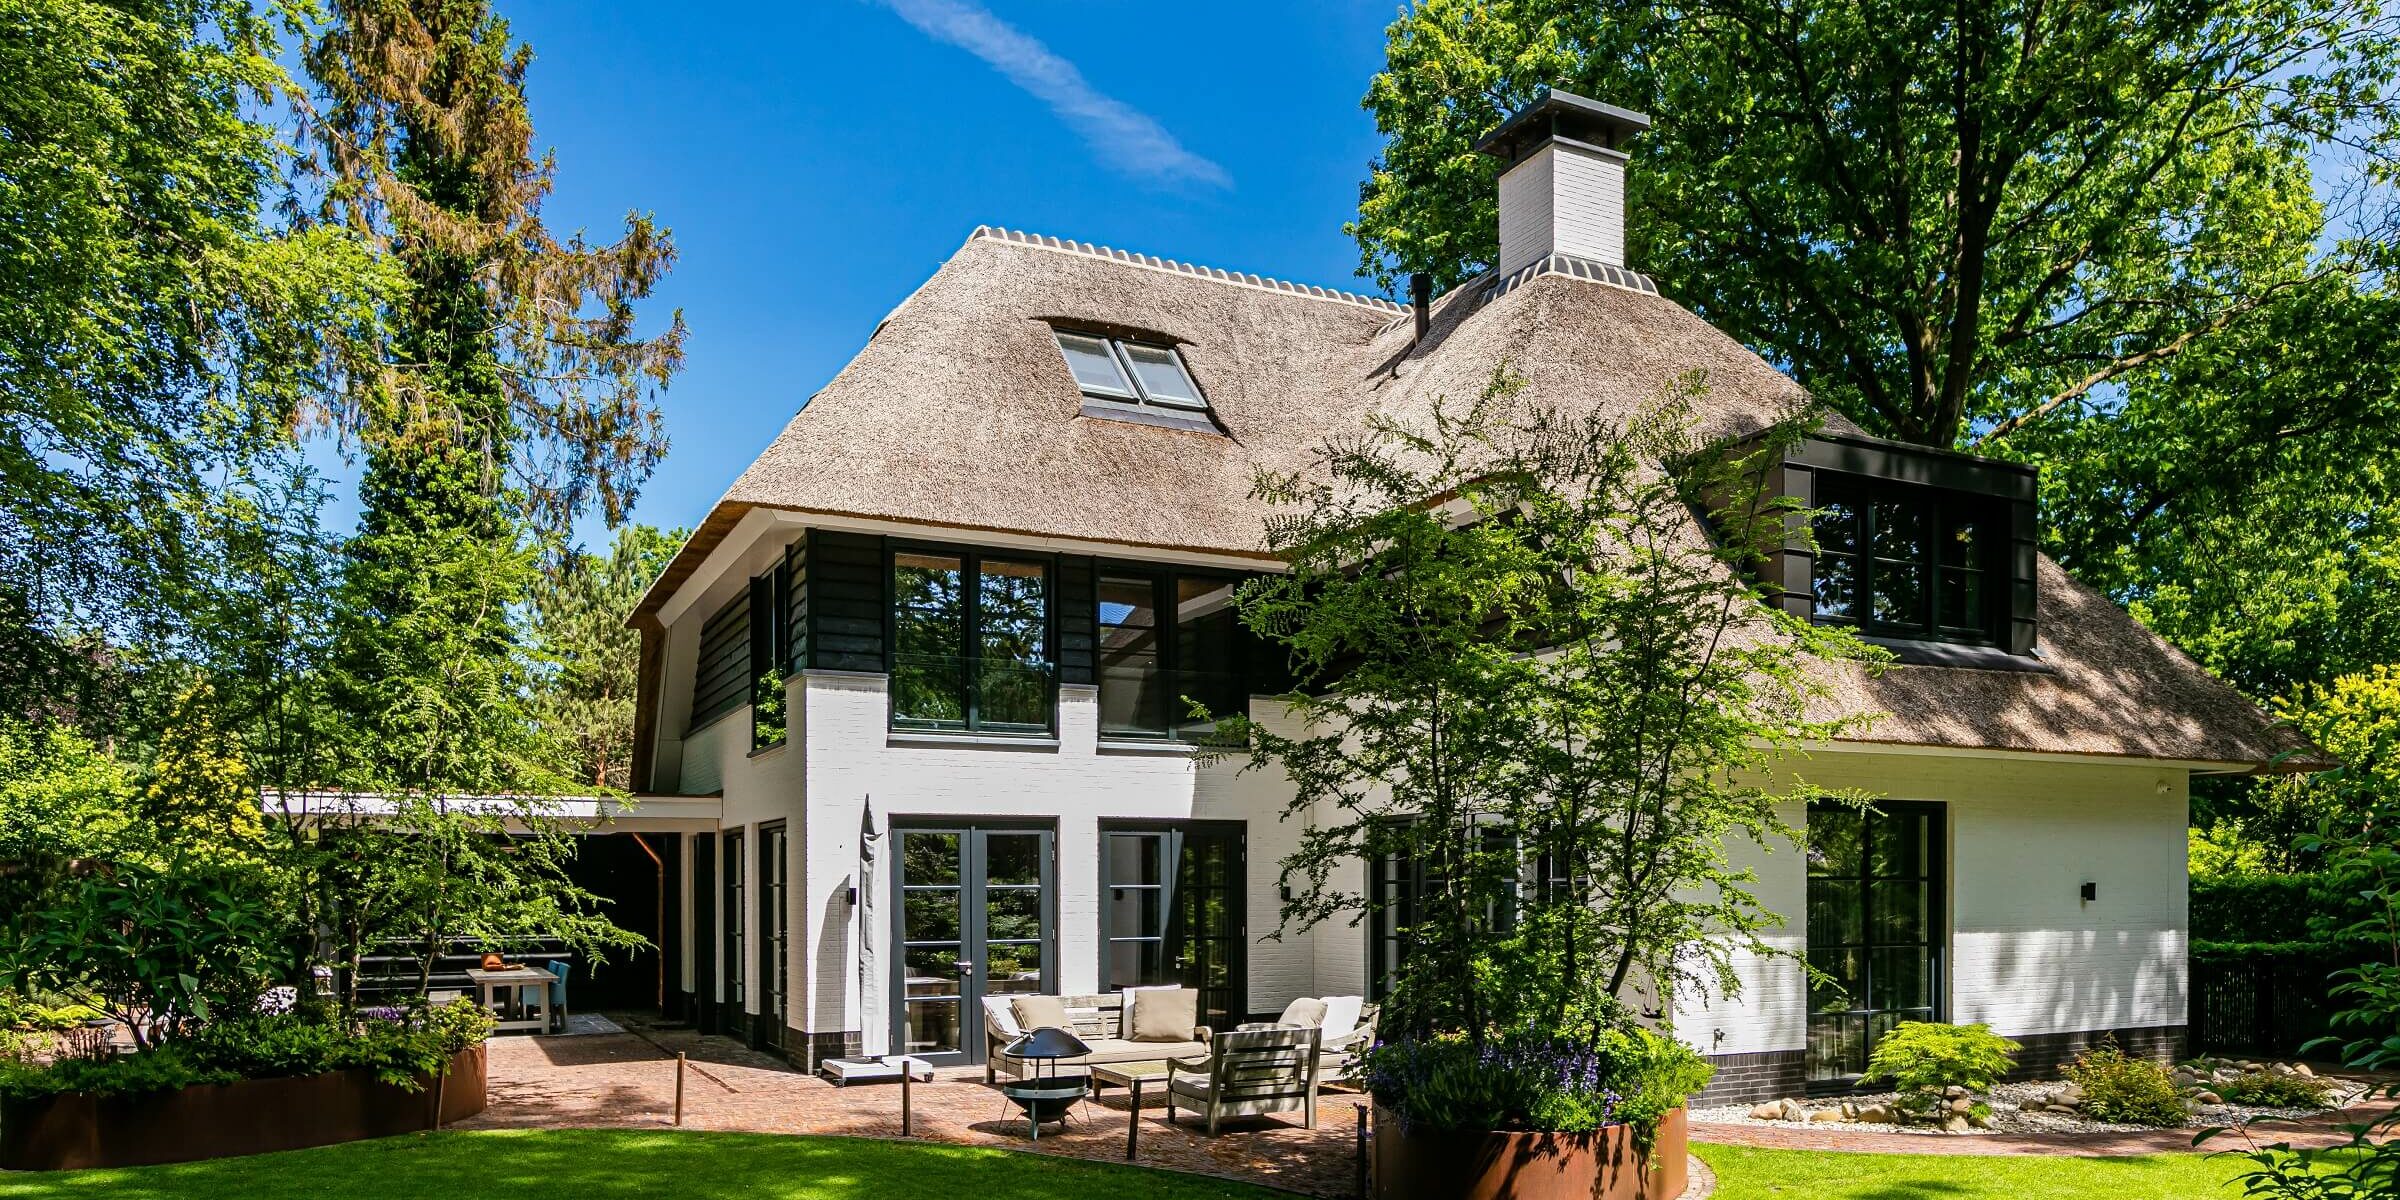 Rechter achterzijde rietgedekte villa bouwen door Lichtenberg Exclusieve Villabouw.